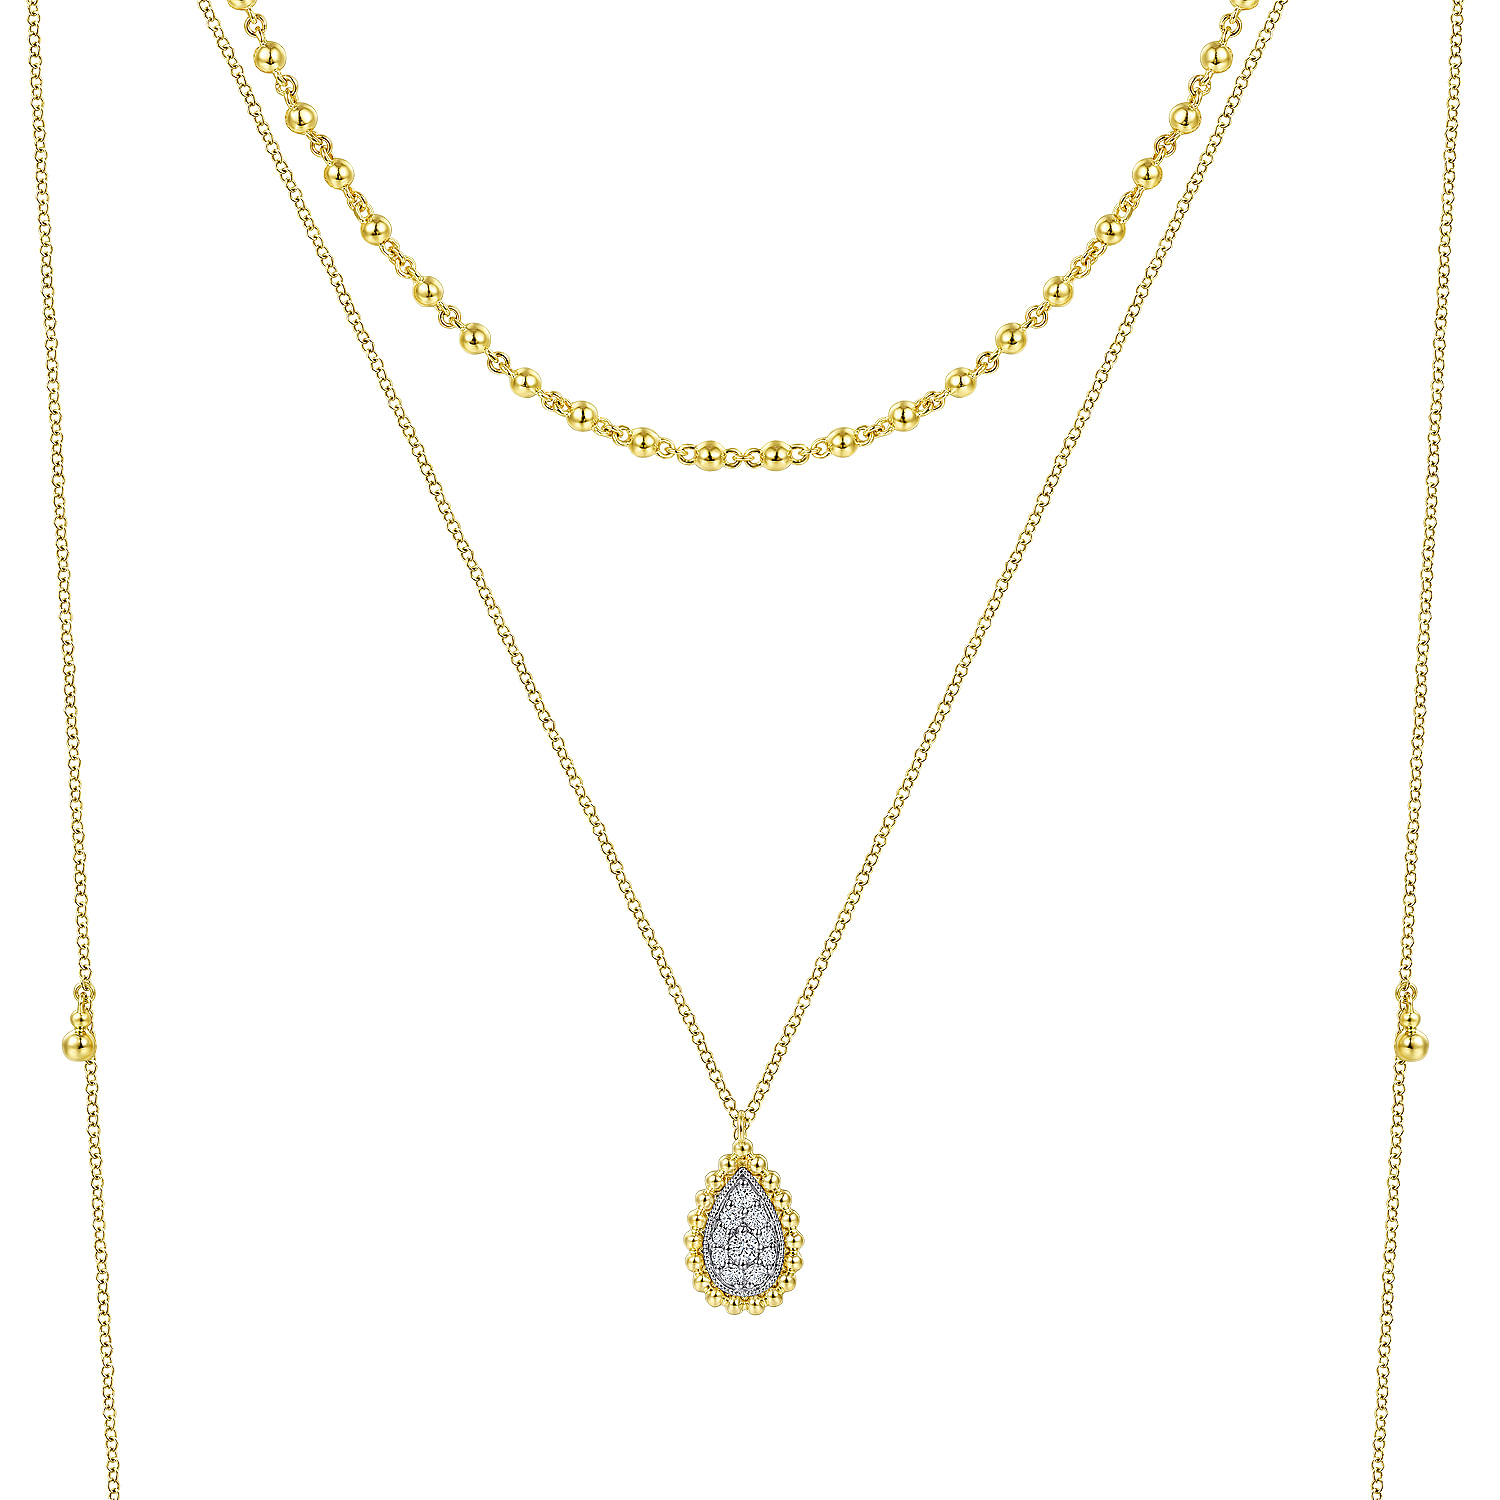 14K Yellow Gold 3 Strand Teardrop Diamond Pavé Necklace with Drops